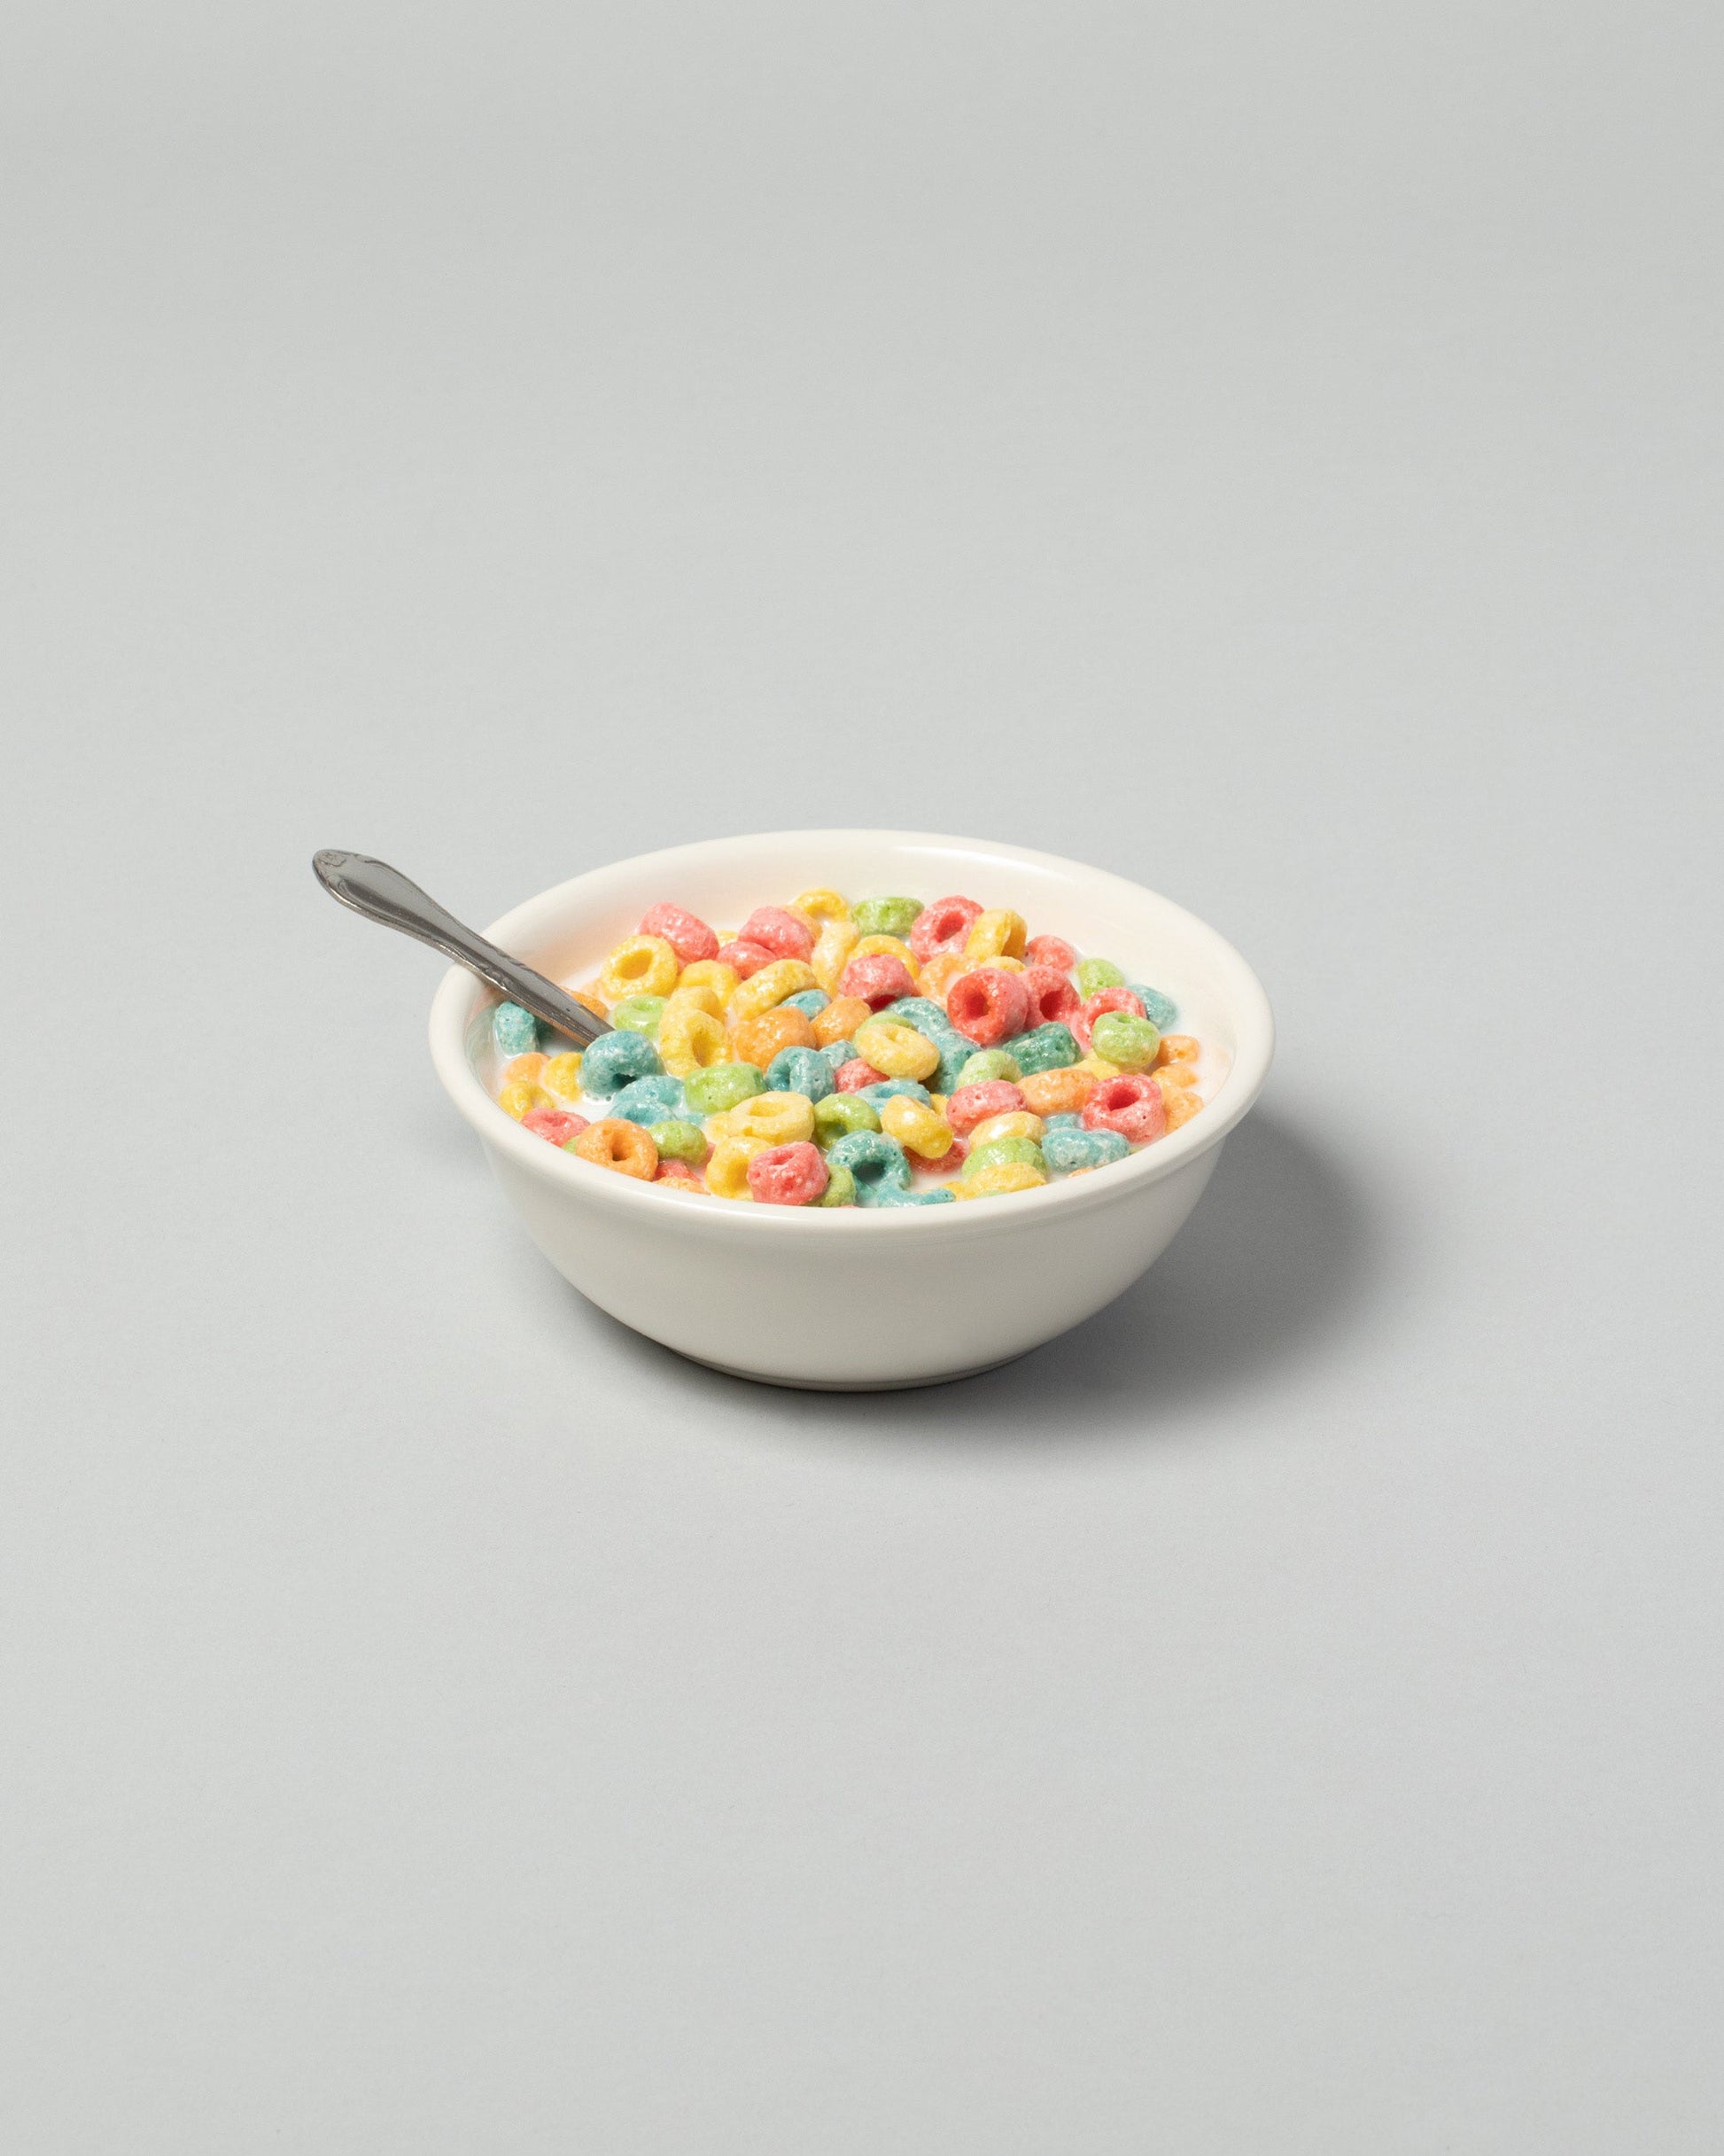 Spills Fruity O's Breakfast on light color background.